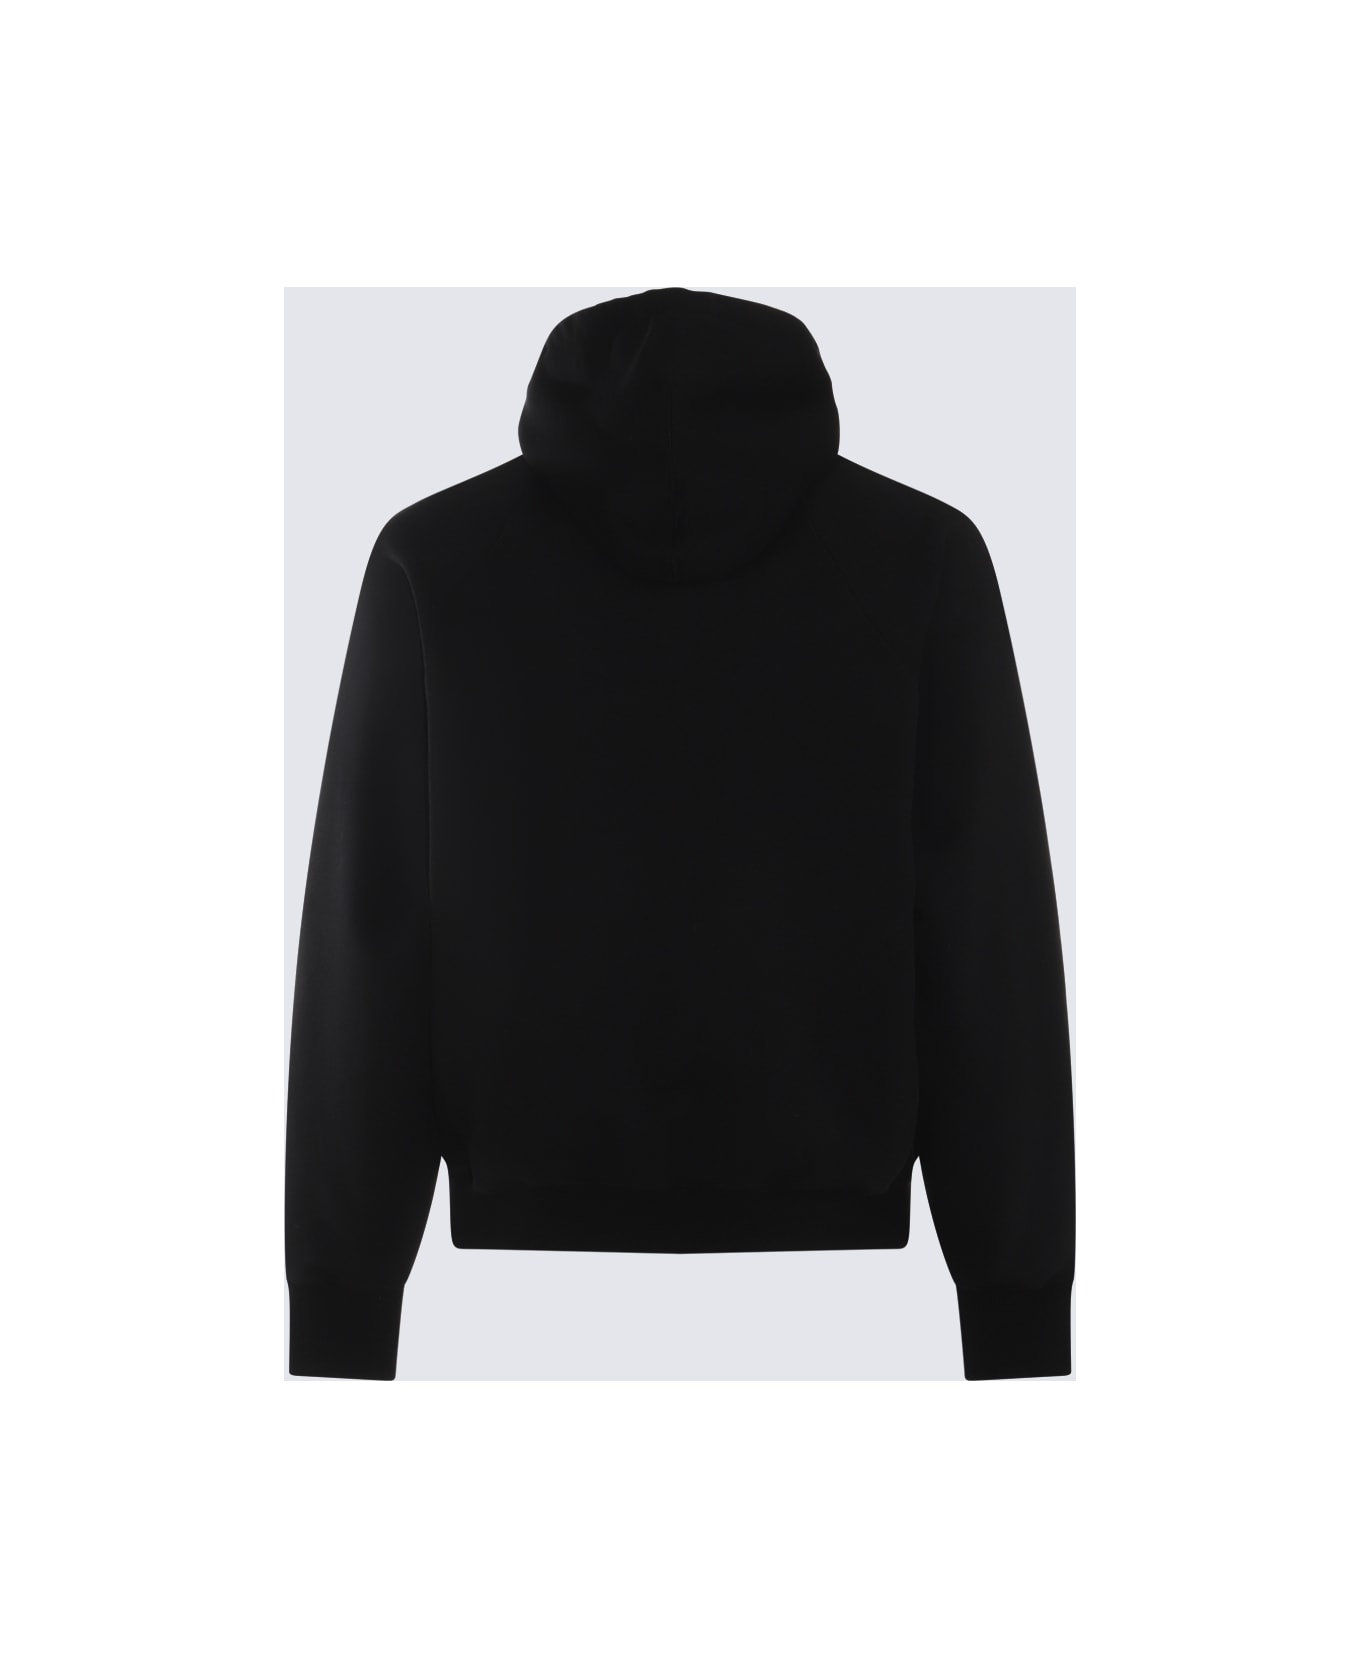 Ami Alexandre Mattiussi Black And White Cotton Blend Sweatshirt - Black